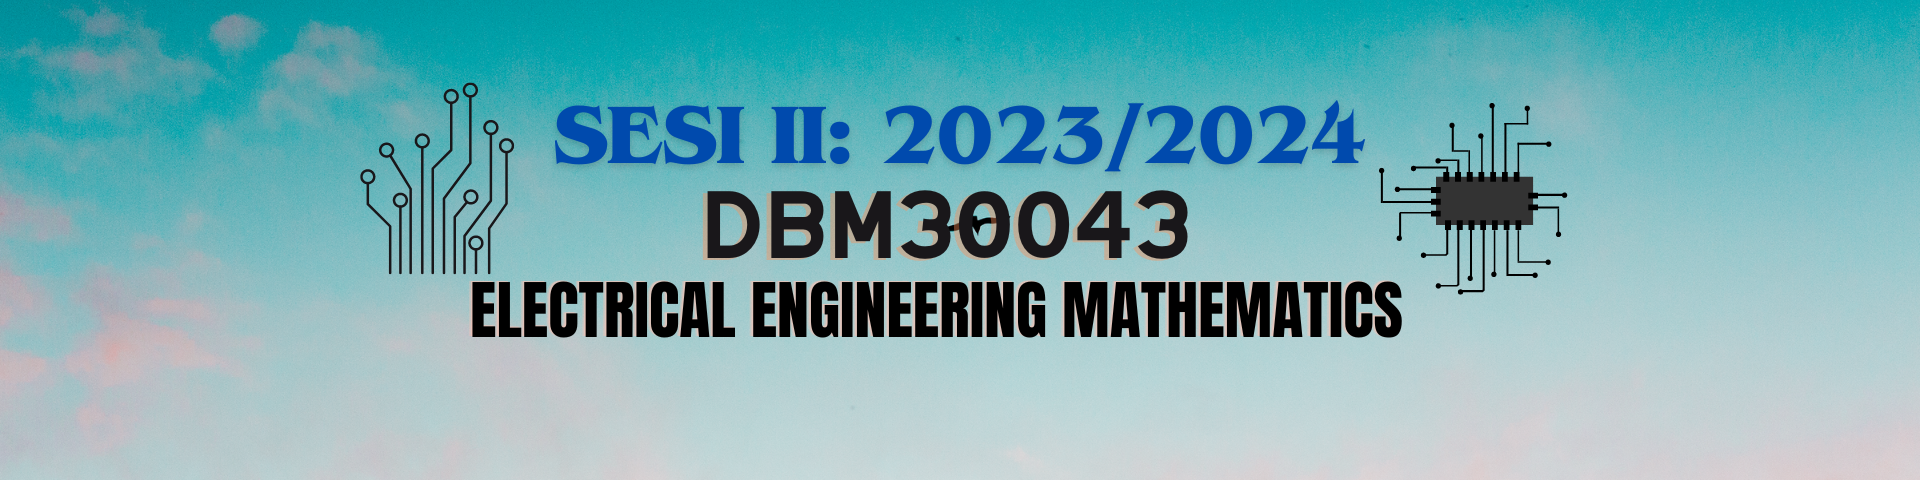 DBM30043 ELECTRICAL ENGINEERING MATHEMATICS